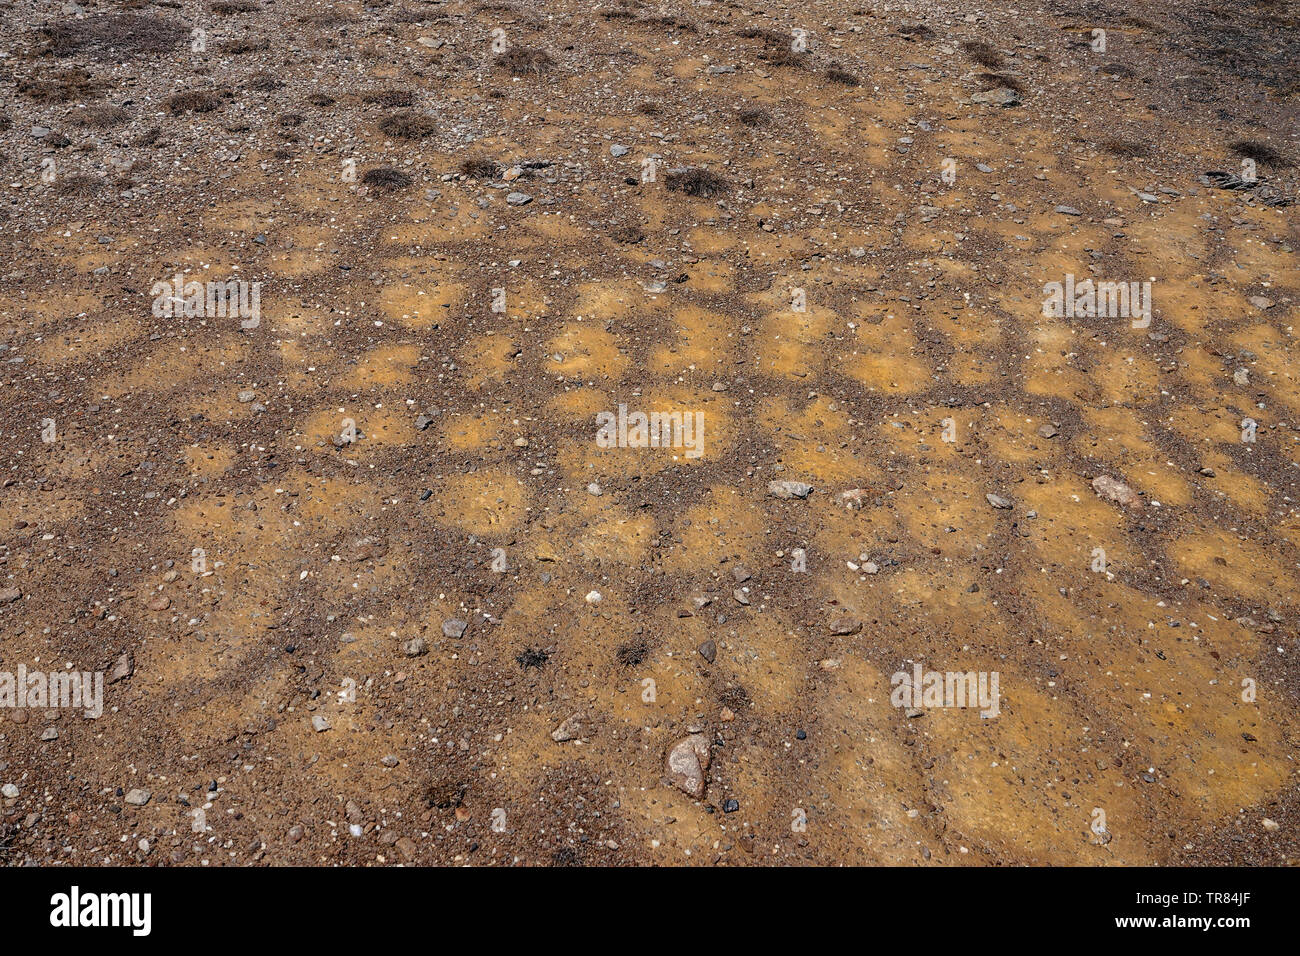 Frost polygons on flat gravel area, Col du Granon, Briancon, Ecrins, France Stock Photo